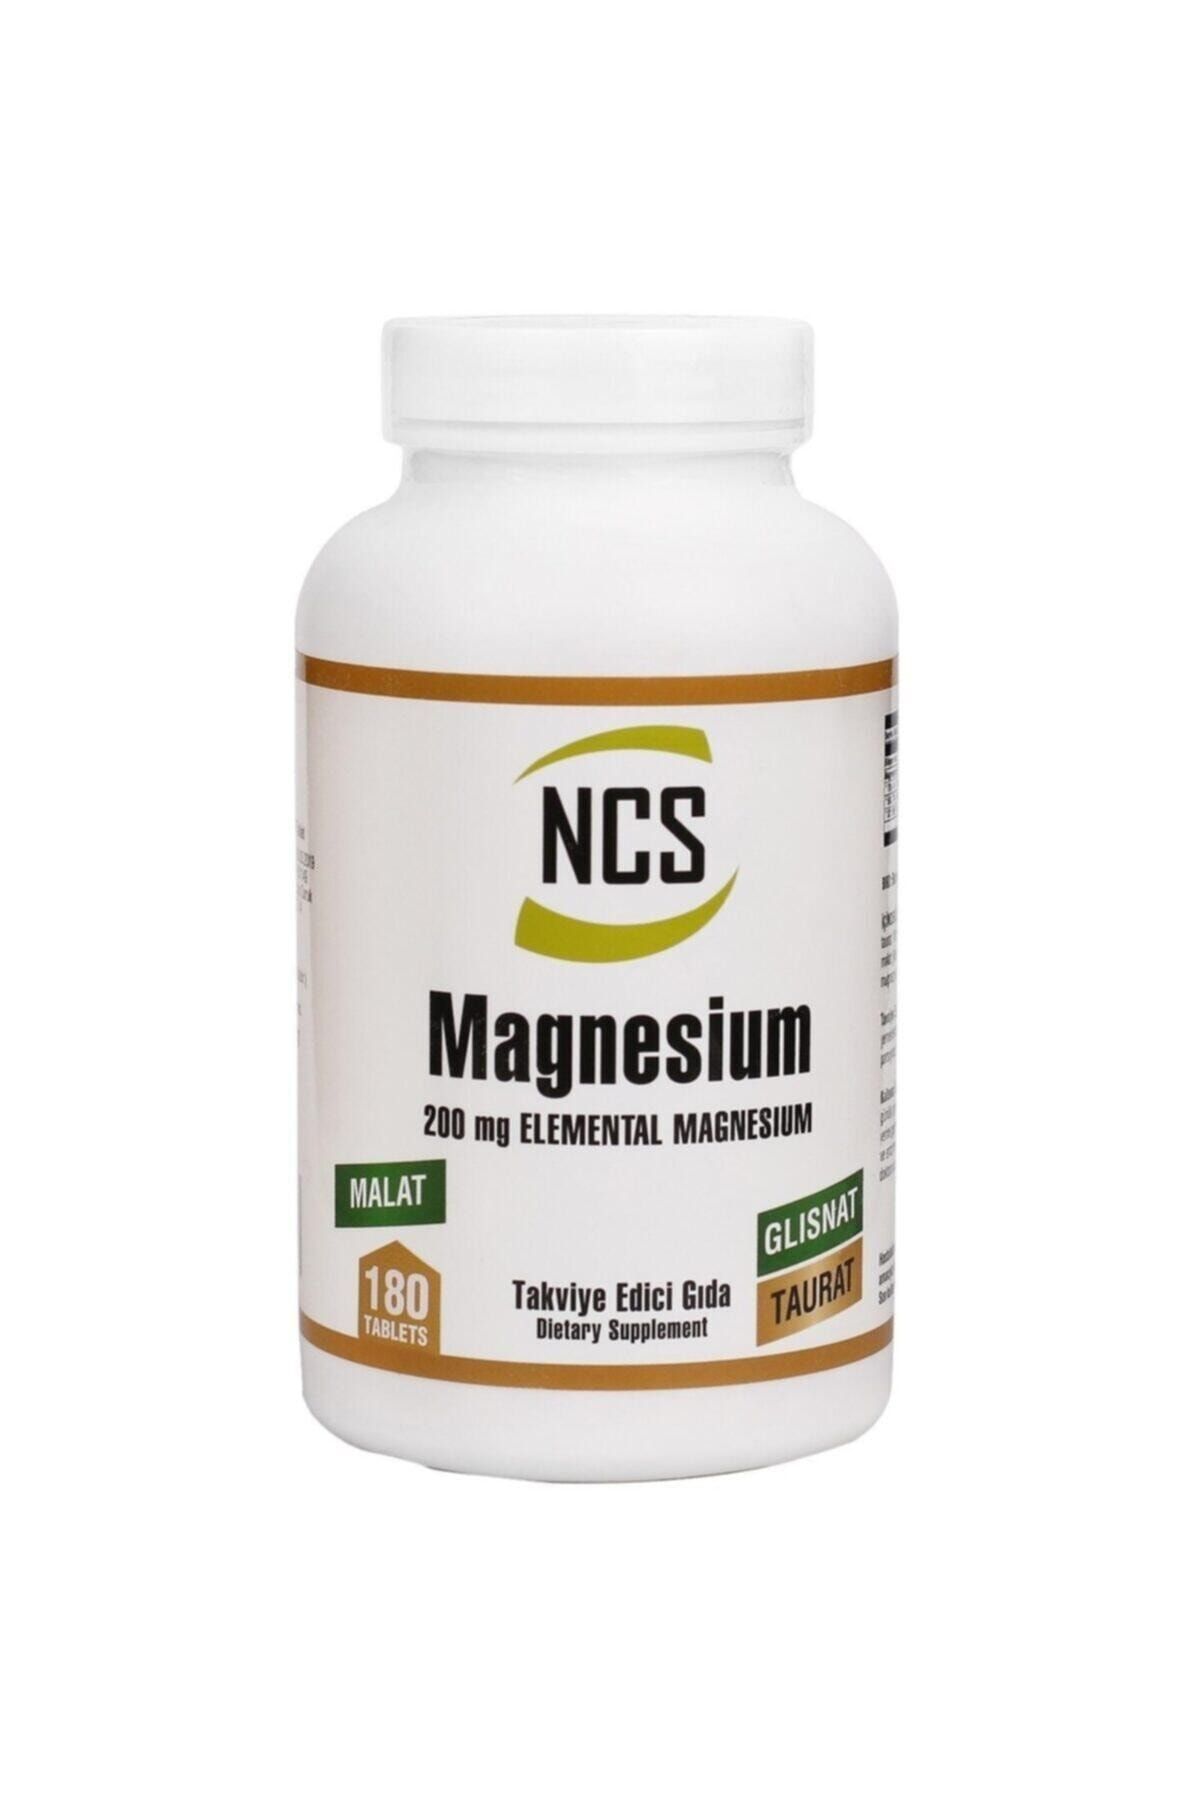 Ncs Magnesium (magnezyum) Malat Glisinat Taurat 180 Tablet